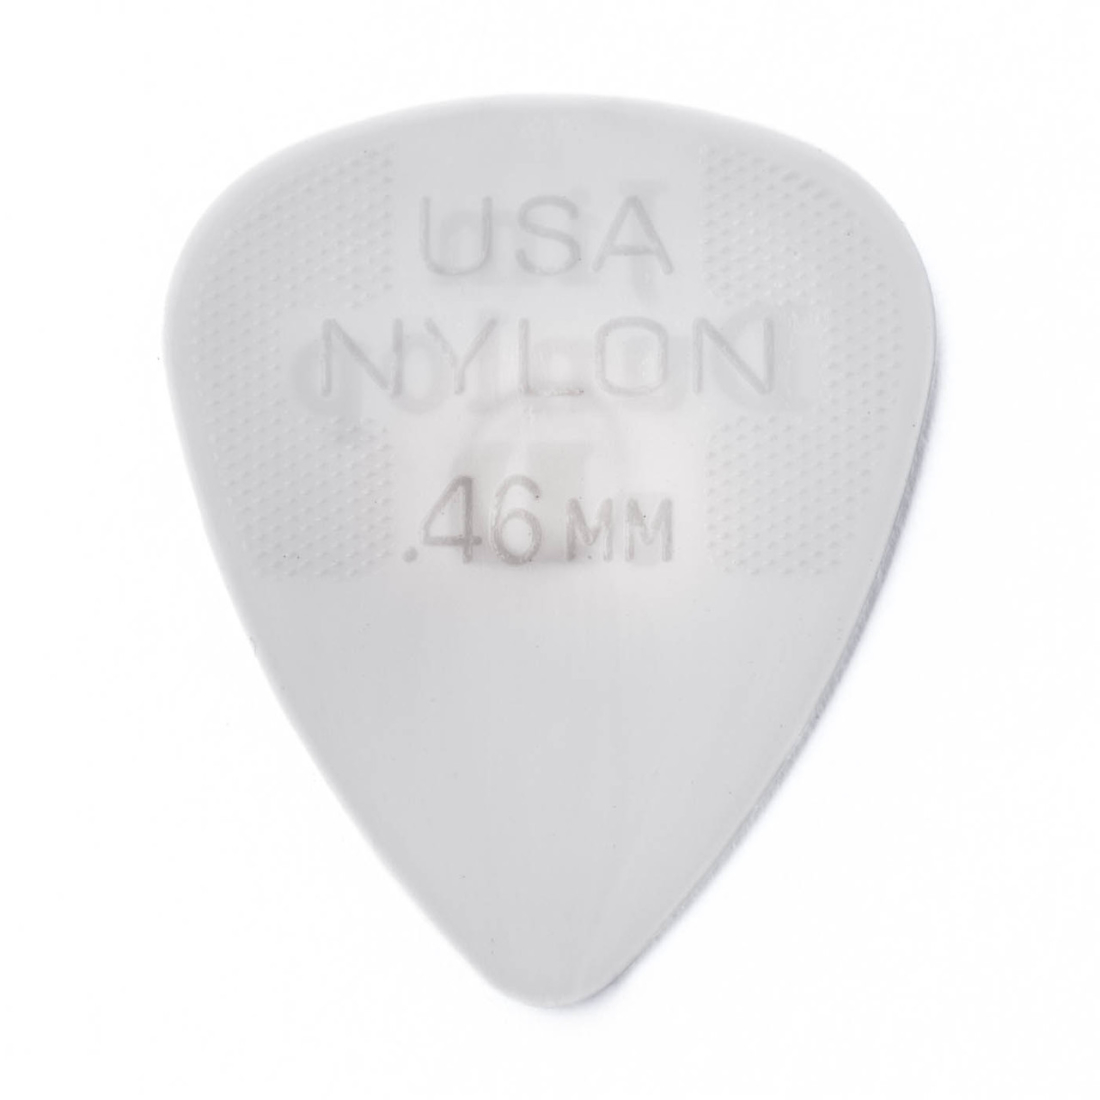 Nylon Standard Player Pack (12 Pack) - .46mm